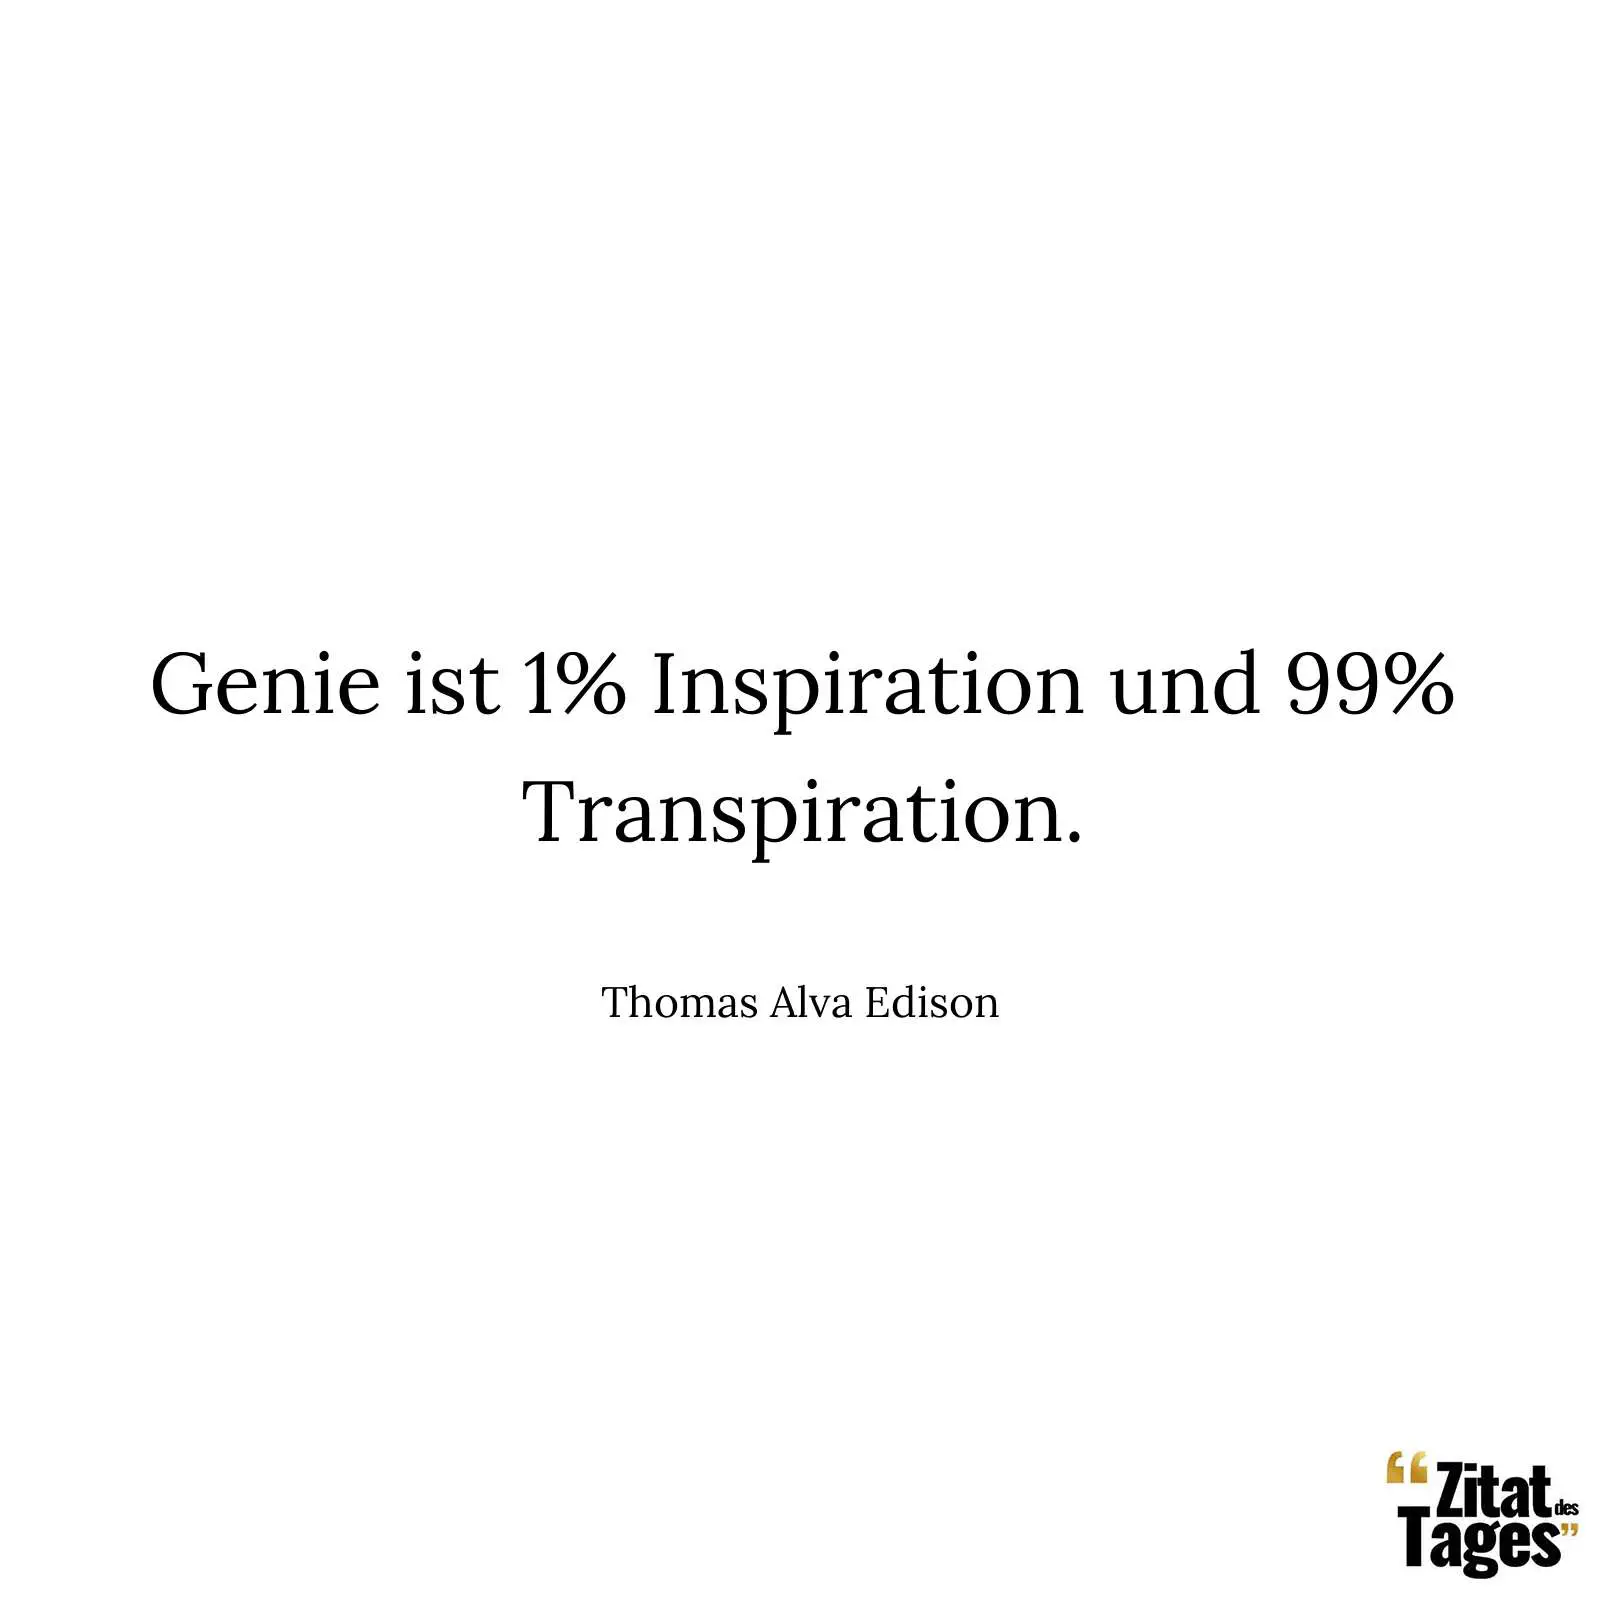 Genie ist 1% Inspiration und 99% Transpiration. - Thomas Alva Edison